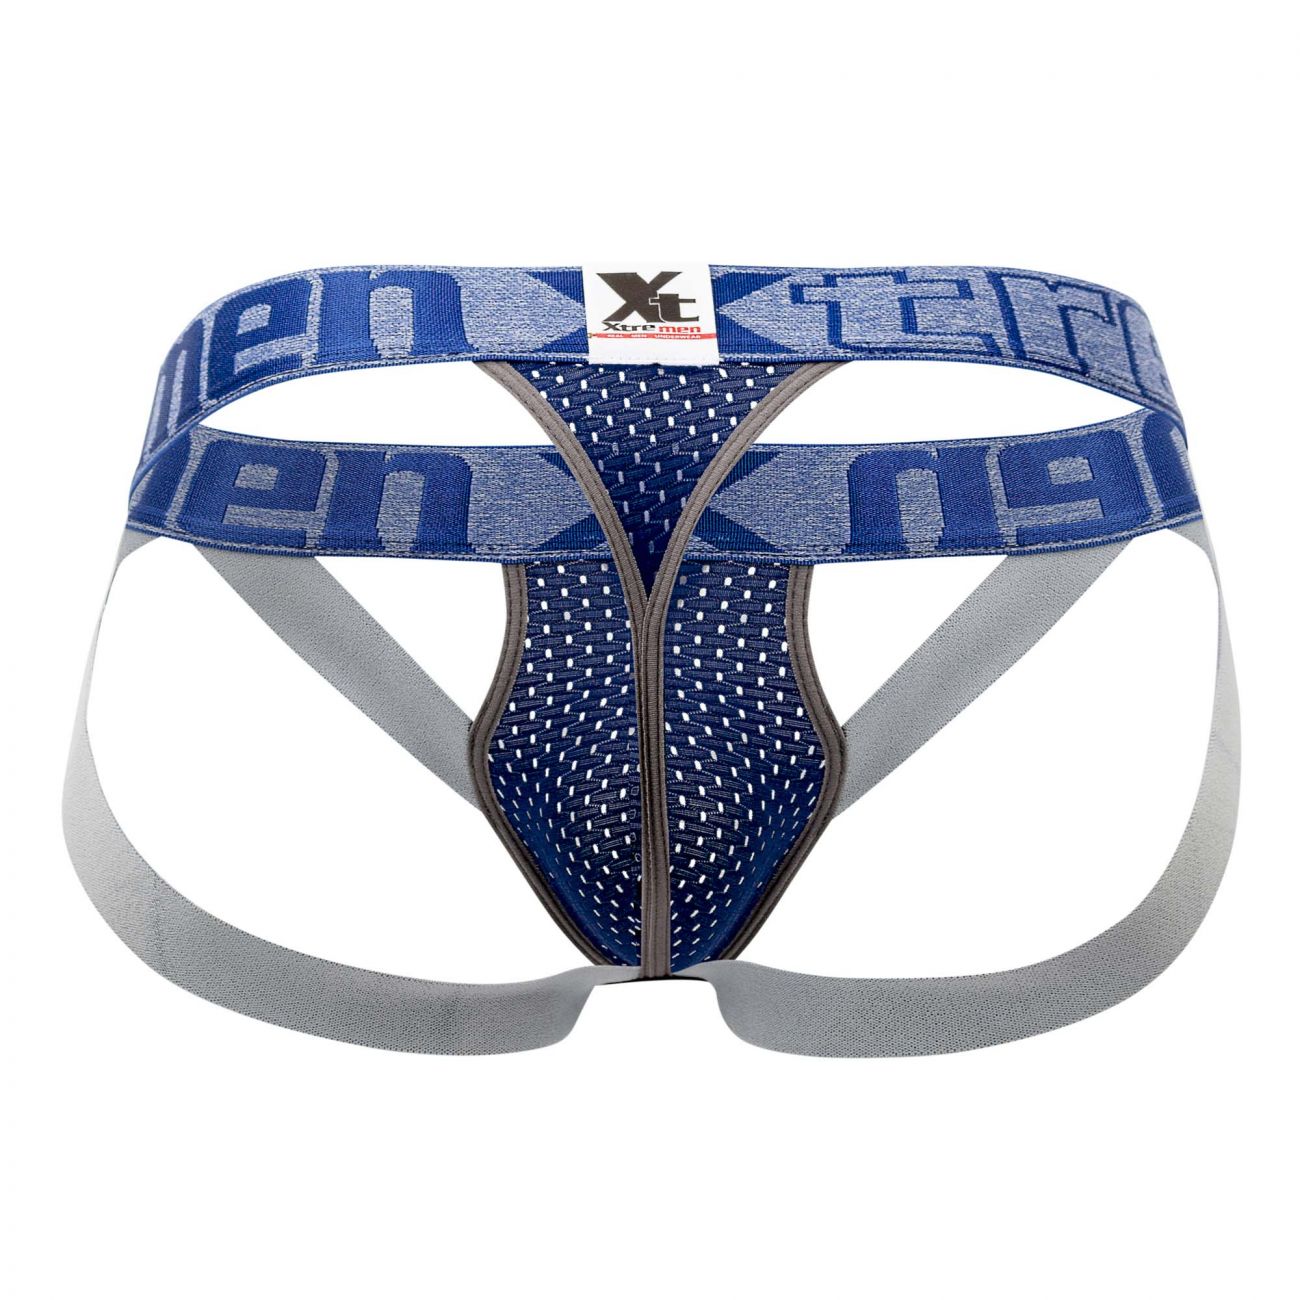 Mens Underwear: Xtremen 91060 Athletic Jockstrap Thongs | eBay